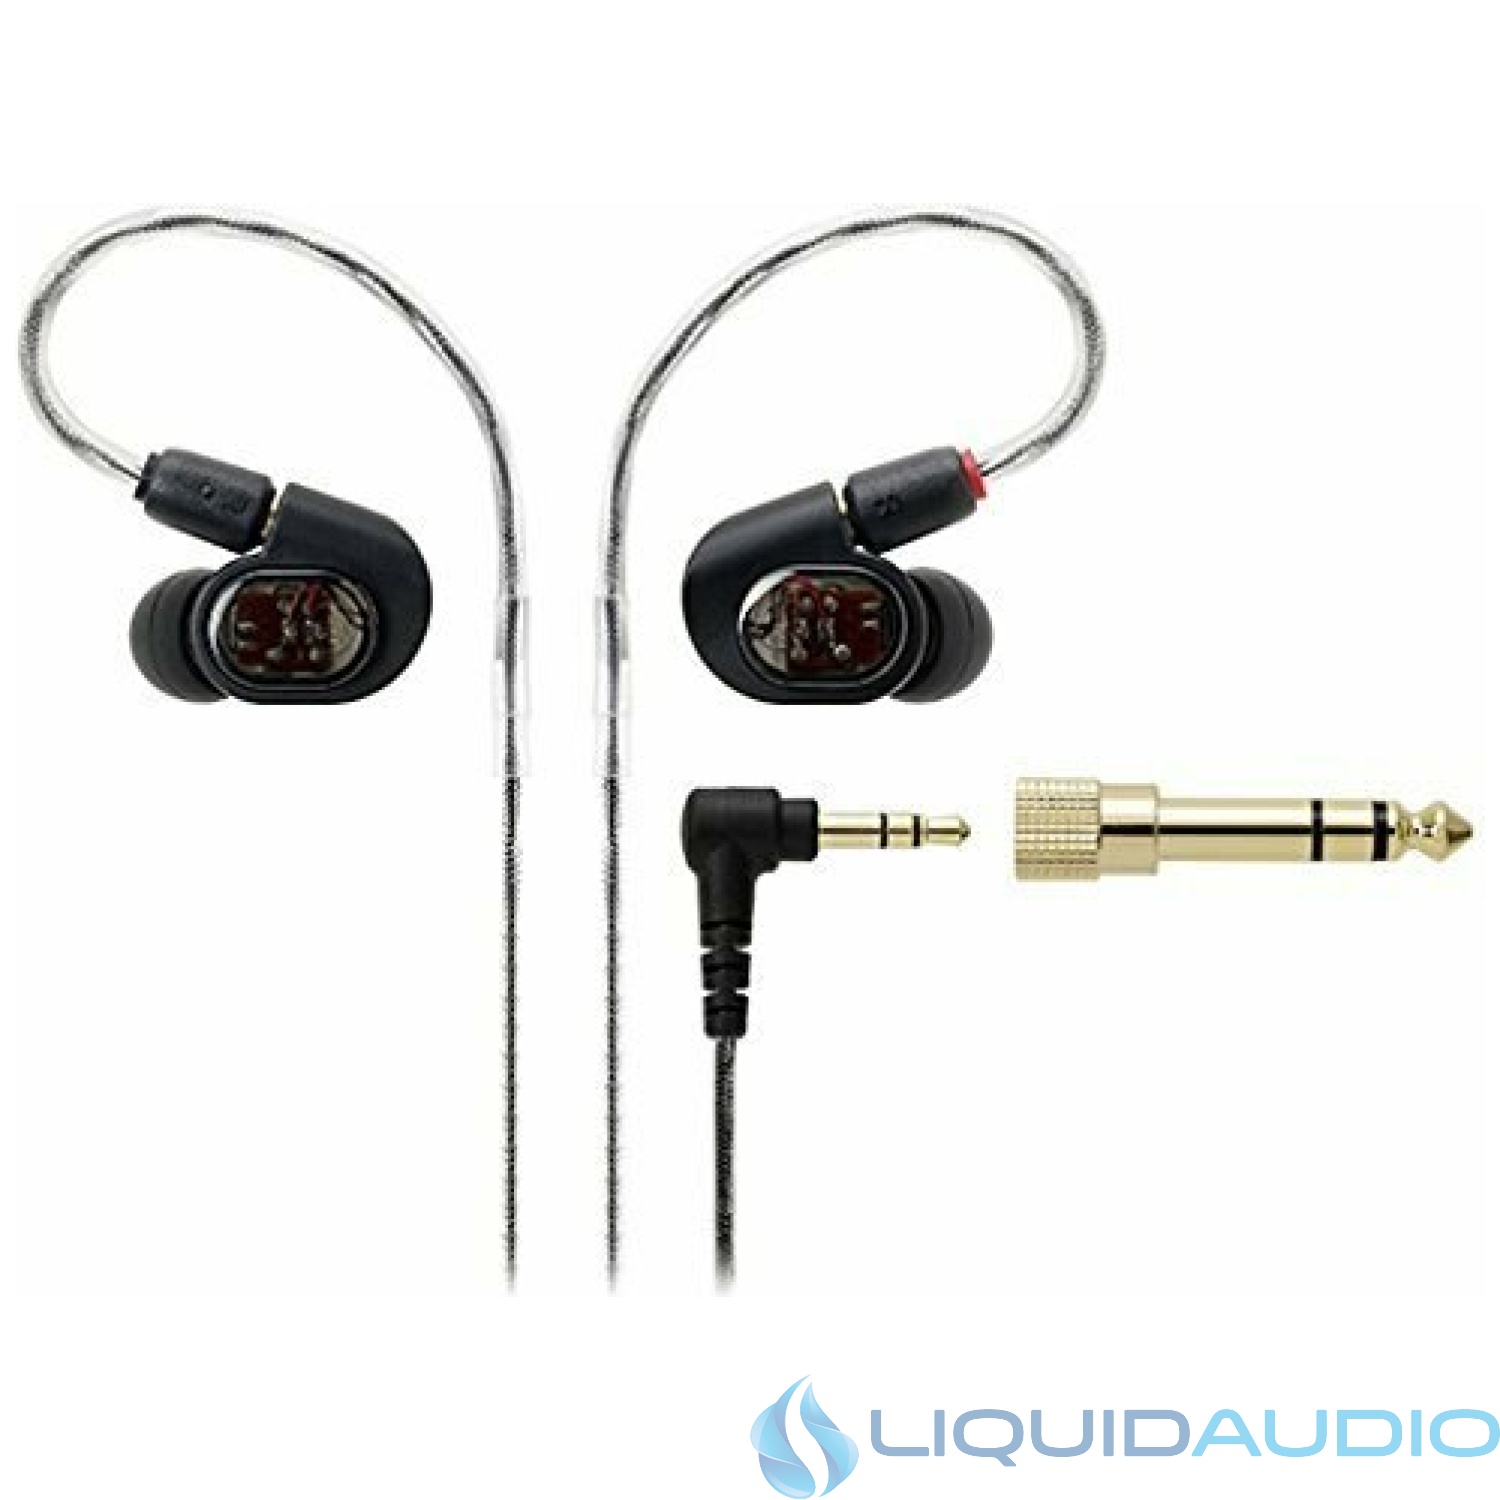 Audio-Technica ATH-E70 Professional In-Ear Monitor Headphone